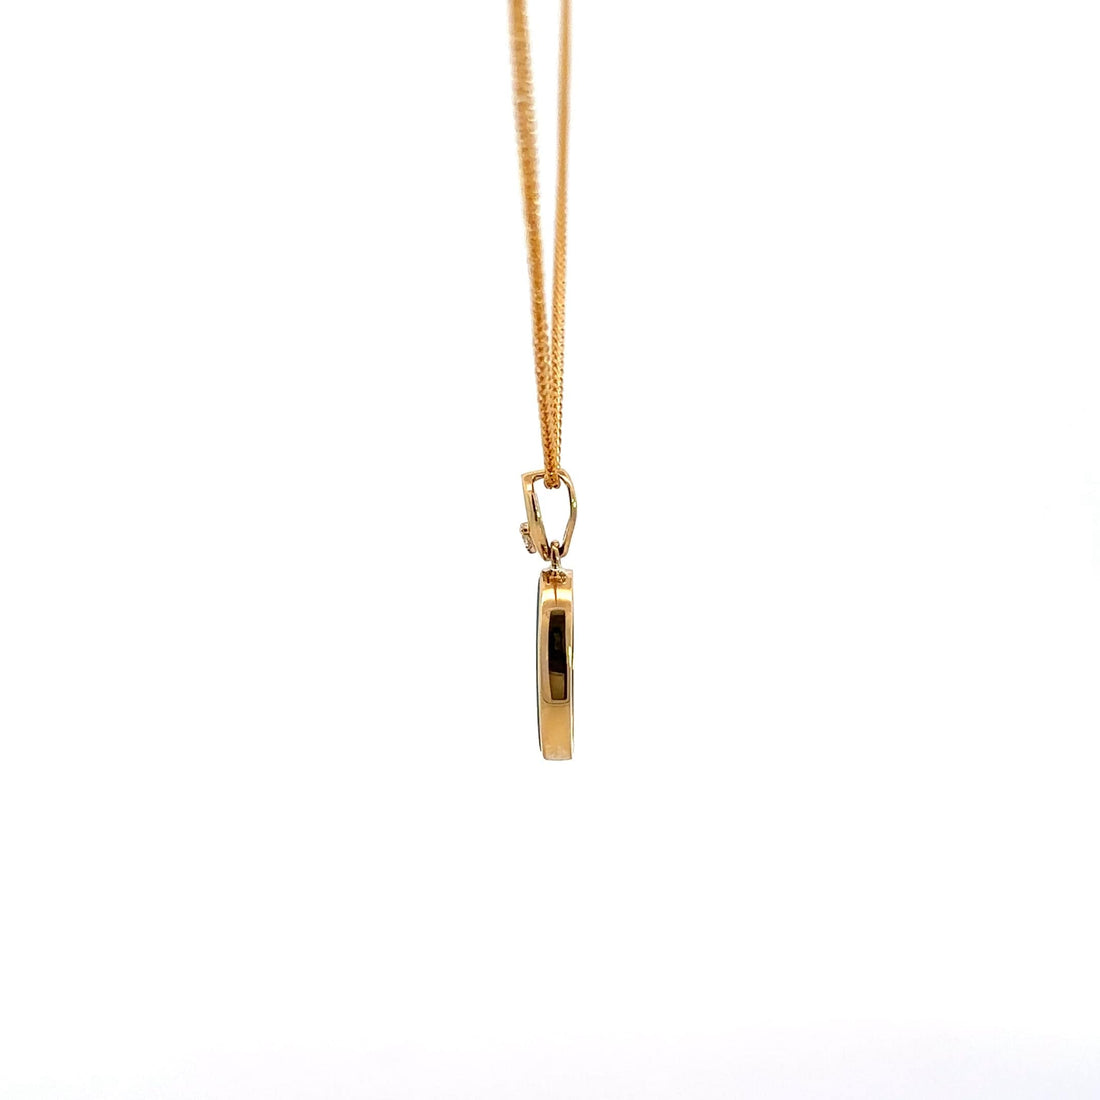 Baikalla Jewelry Gemstone Pendant Necklace Baikalla 14k Yellow Gold Natural Opal Bezel Set Pendant Necklace